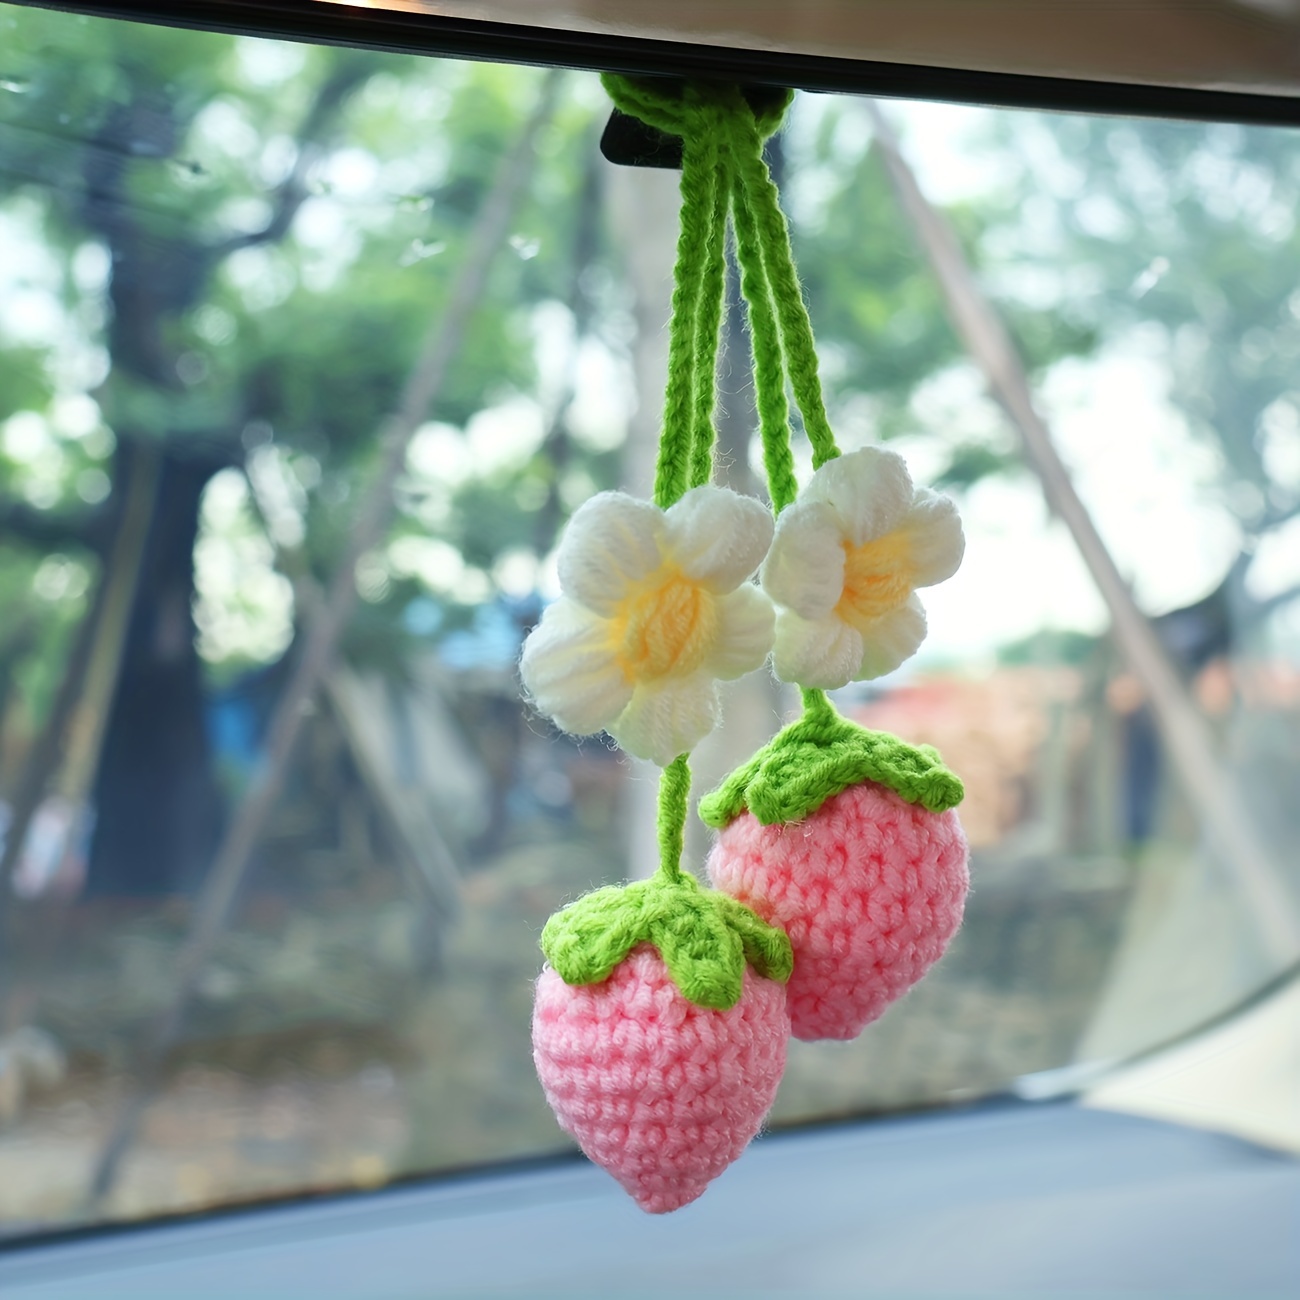 2 Pcs Crochet Strawberry Car Hanging Ornaments Car Rearview Mirror